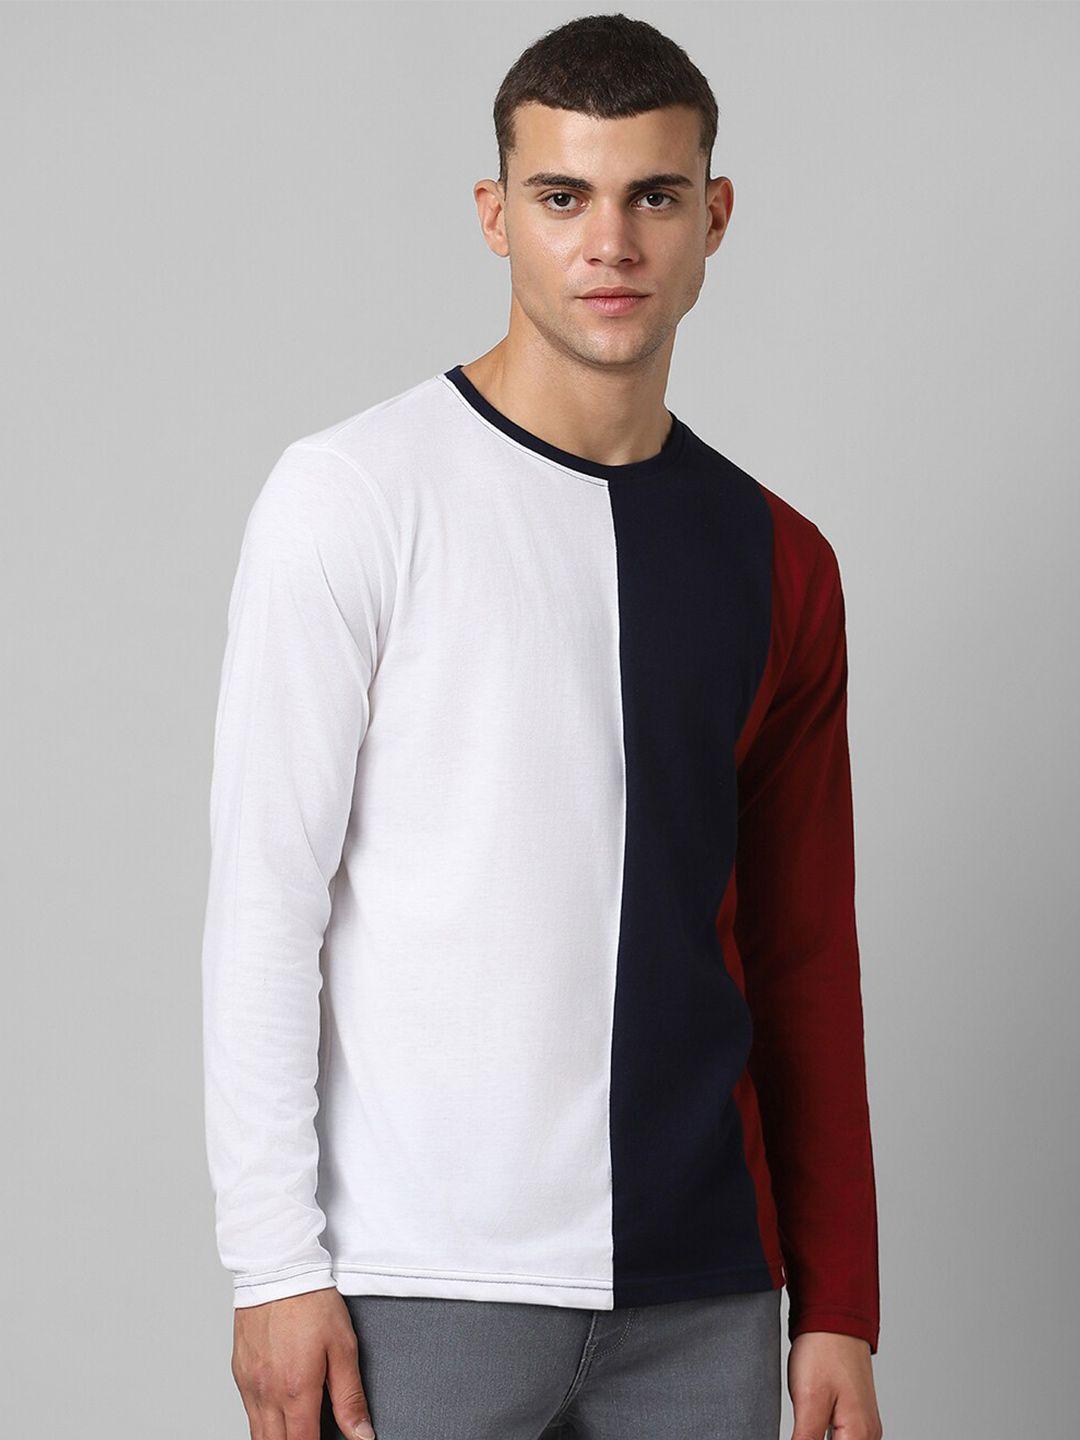 pantaloons colourblocked round neck long sleeve pure cotton regular t-shirt